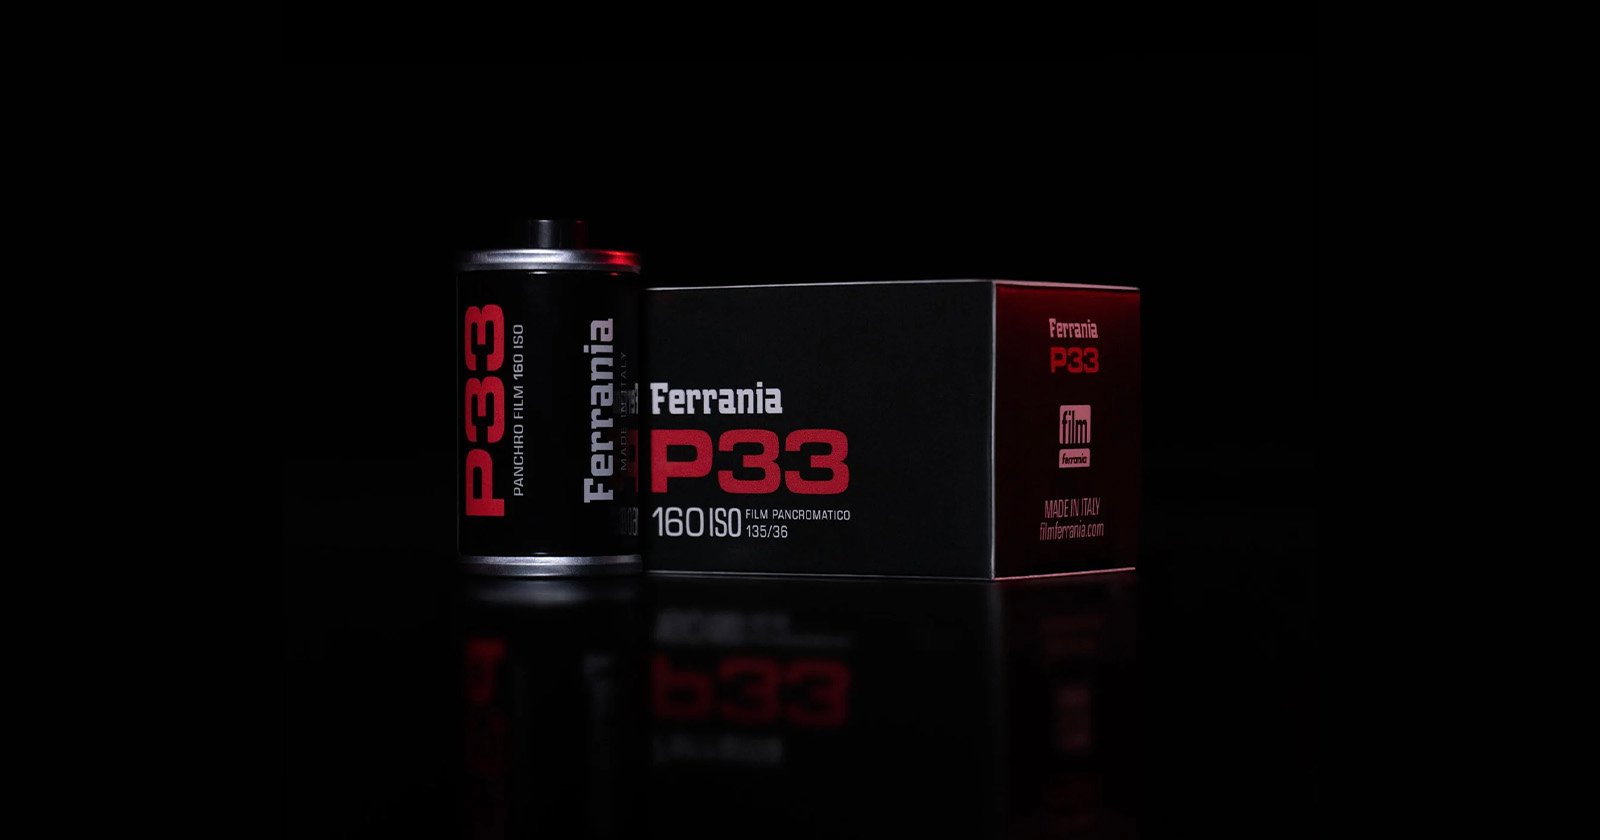 Film Ferranias New P33 Is a Versatile Black and White 35mm Film